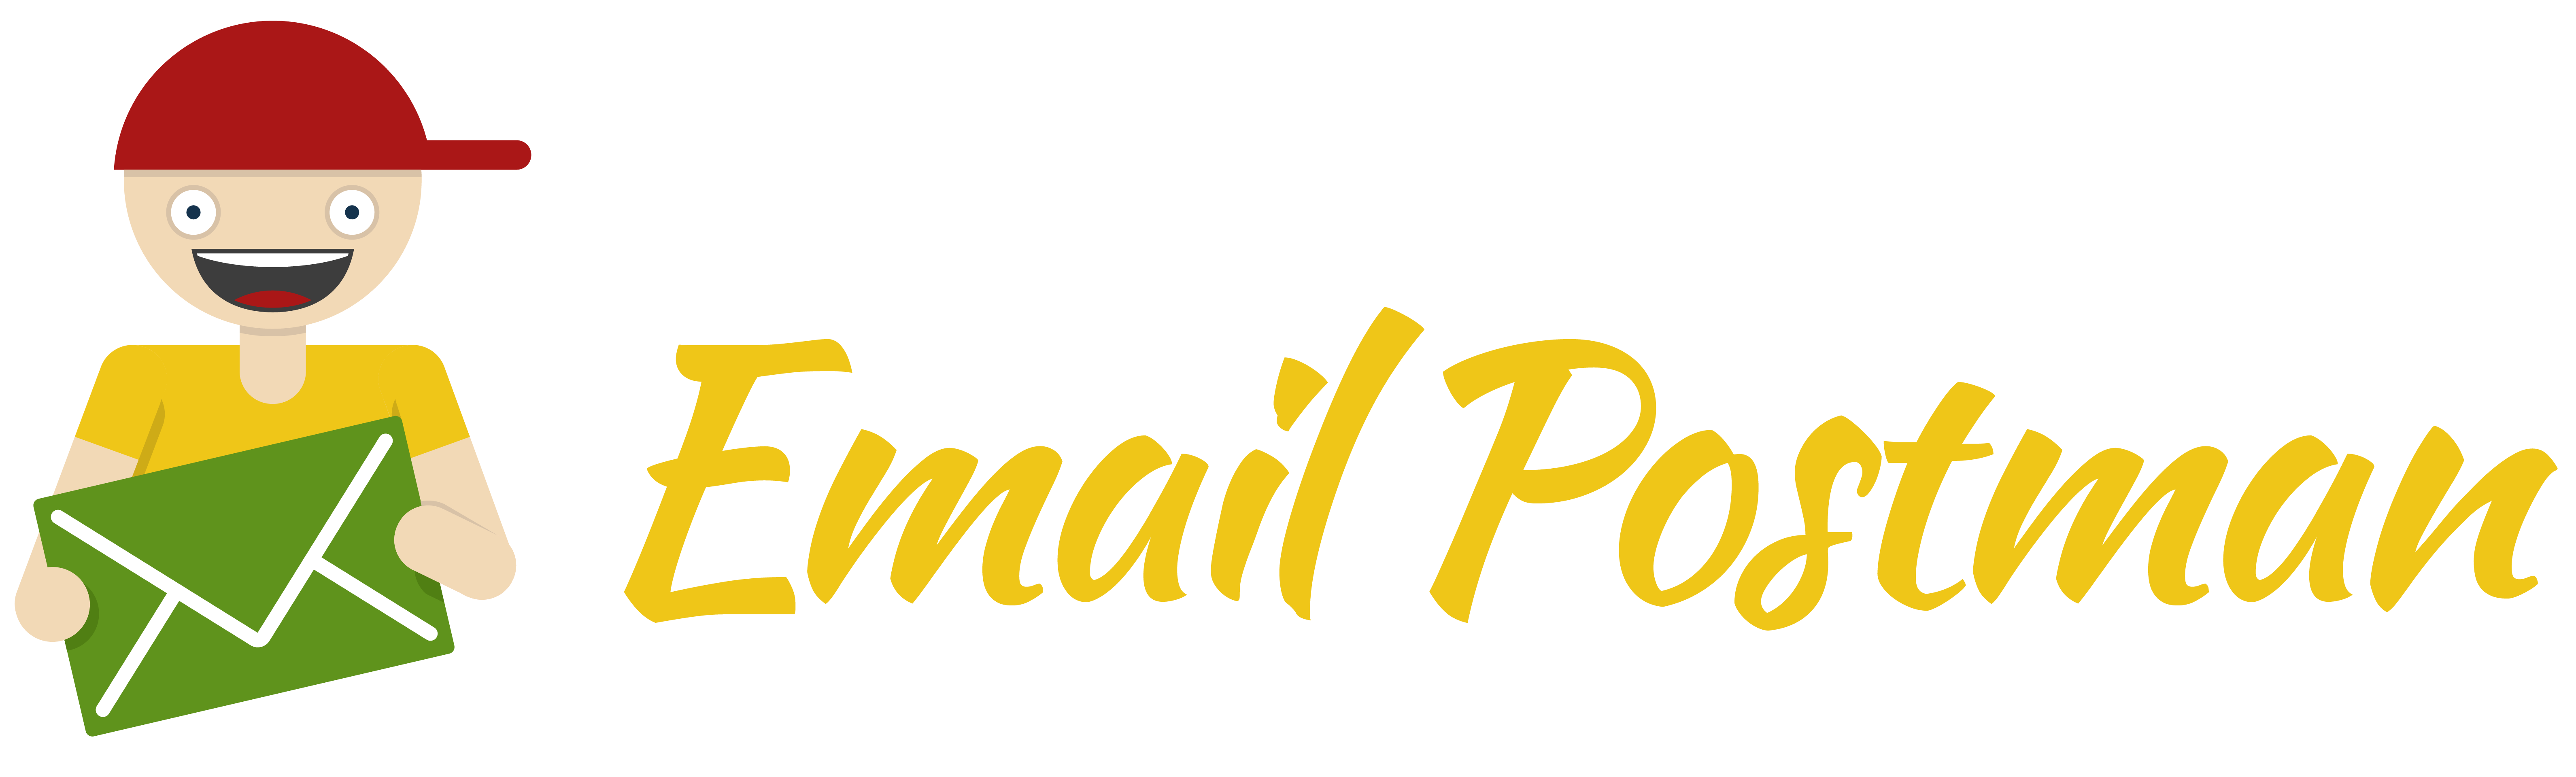 Email-Postman Logo